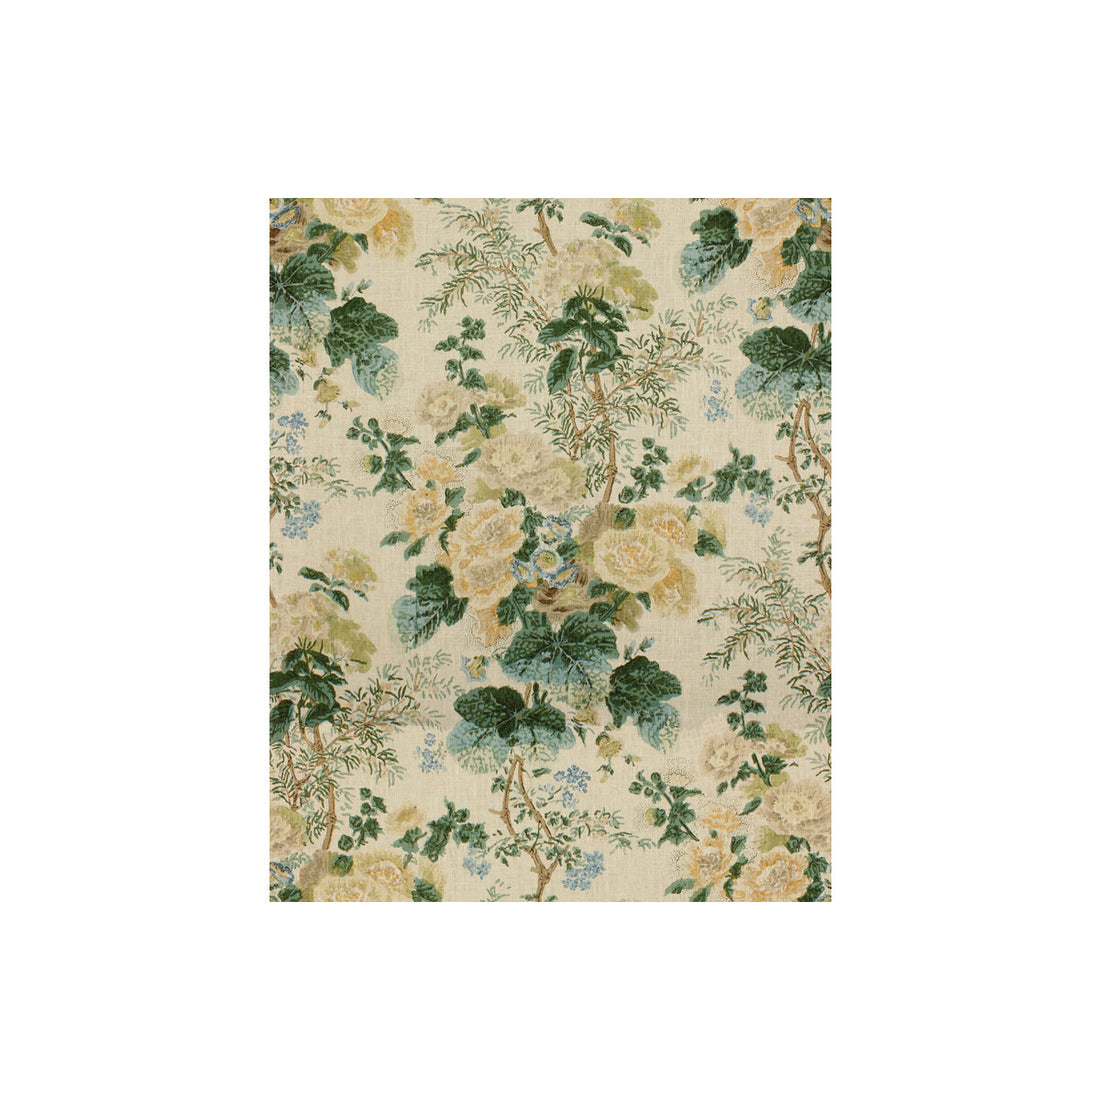 Hollyhock Hdb fabric in lemon/aqua color - pattern 2011118.134.0 - by Lee Jofa